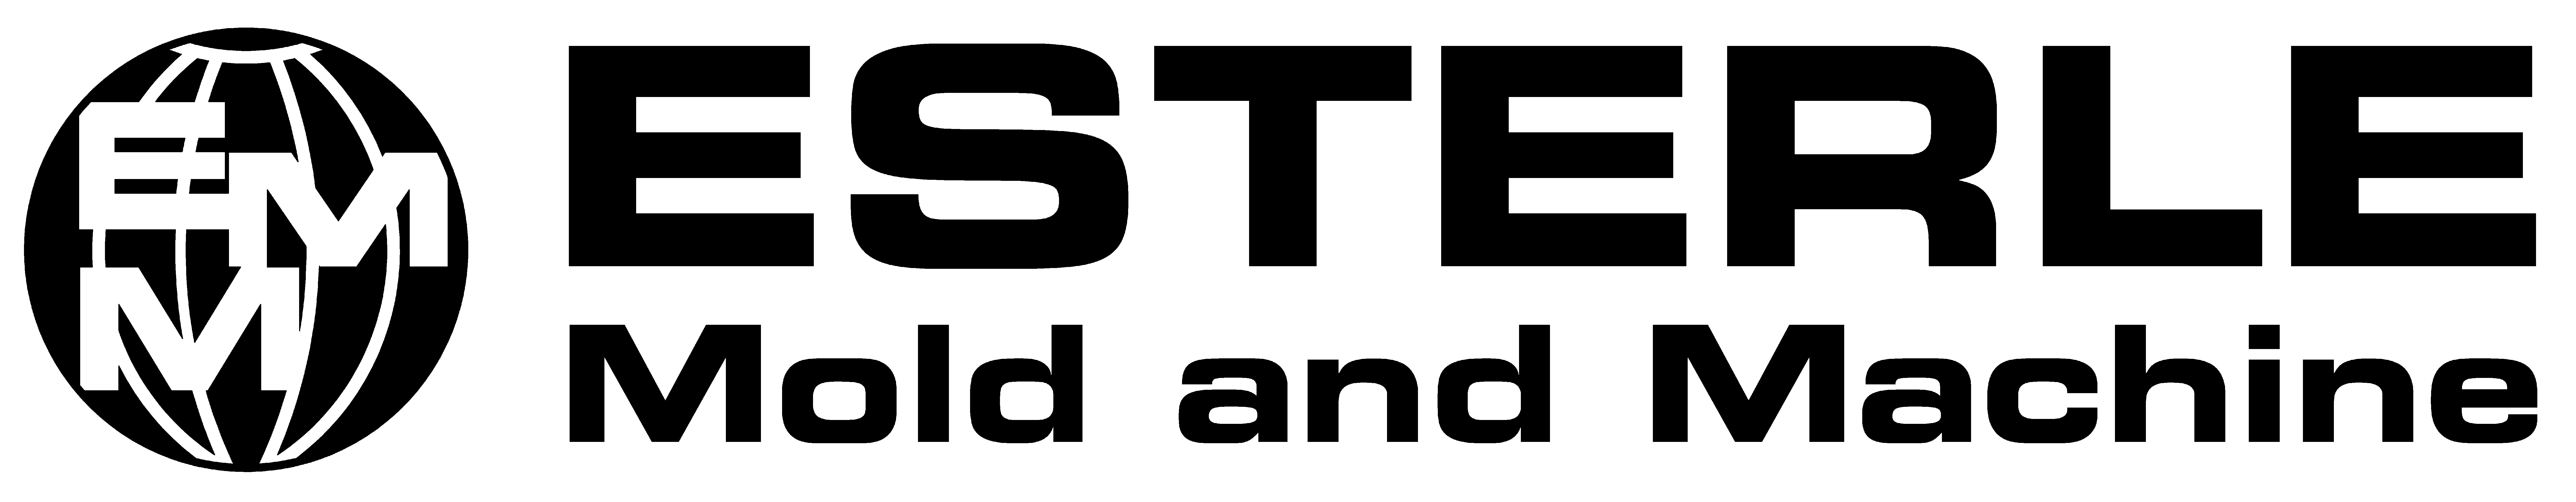 Esterle Logo Reduced